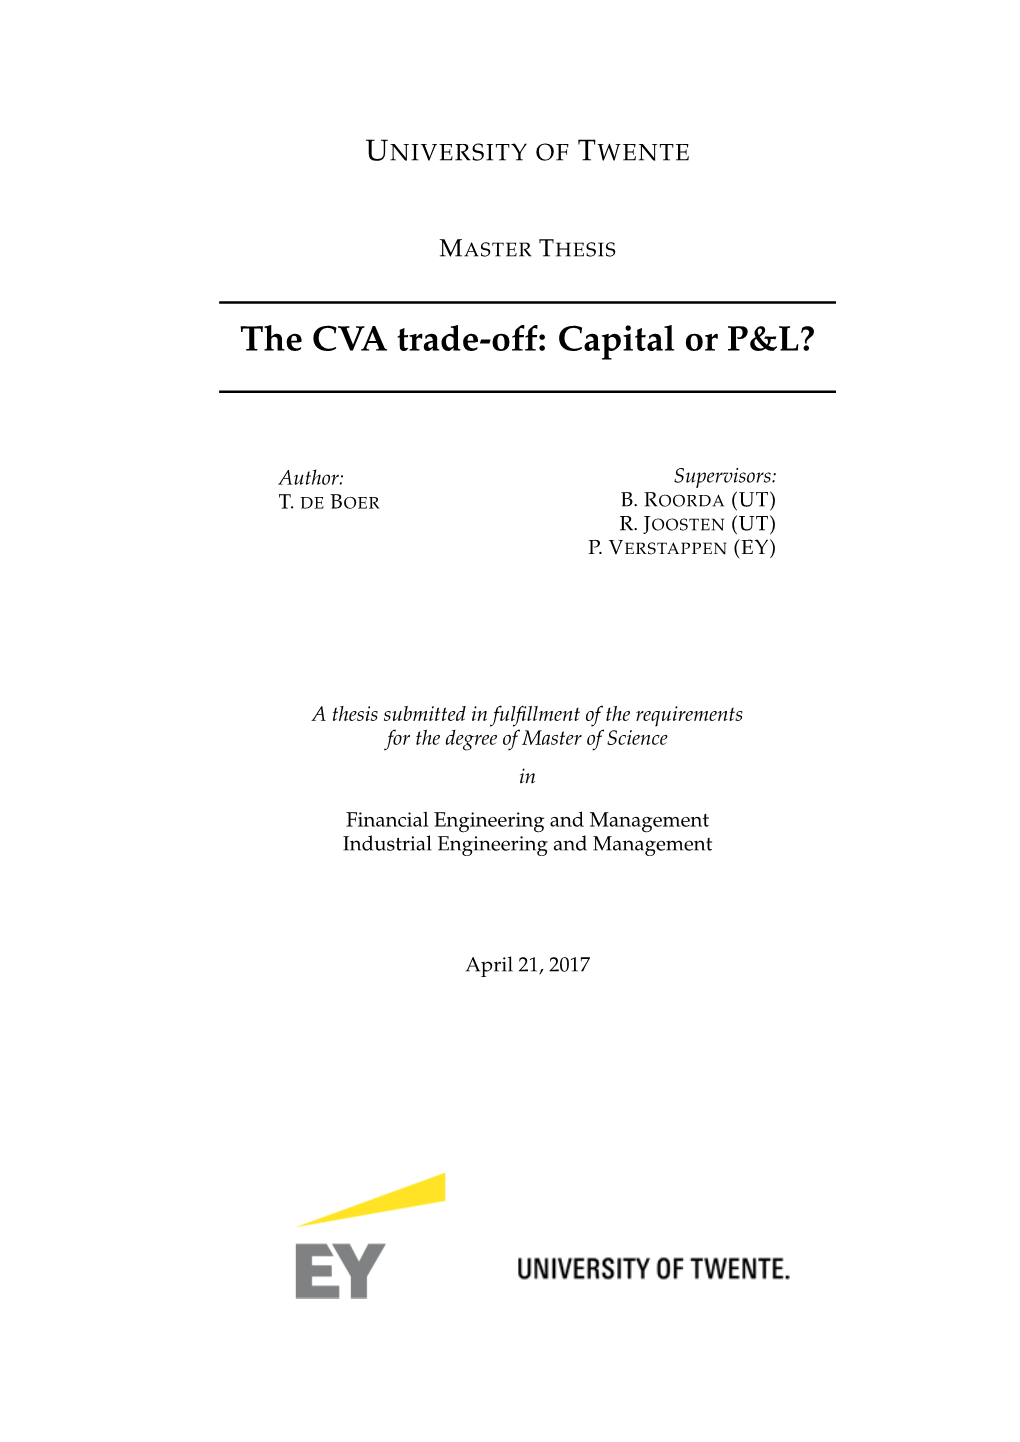 The CVA Trade-Off: Capital Or P&L?